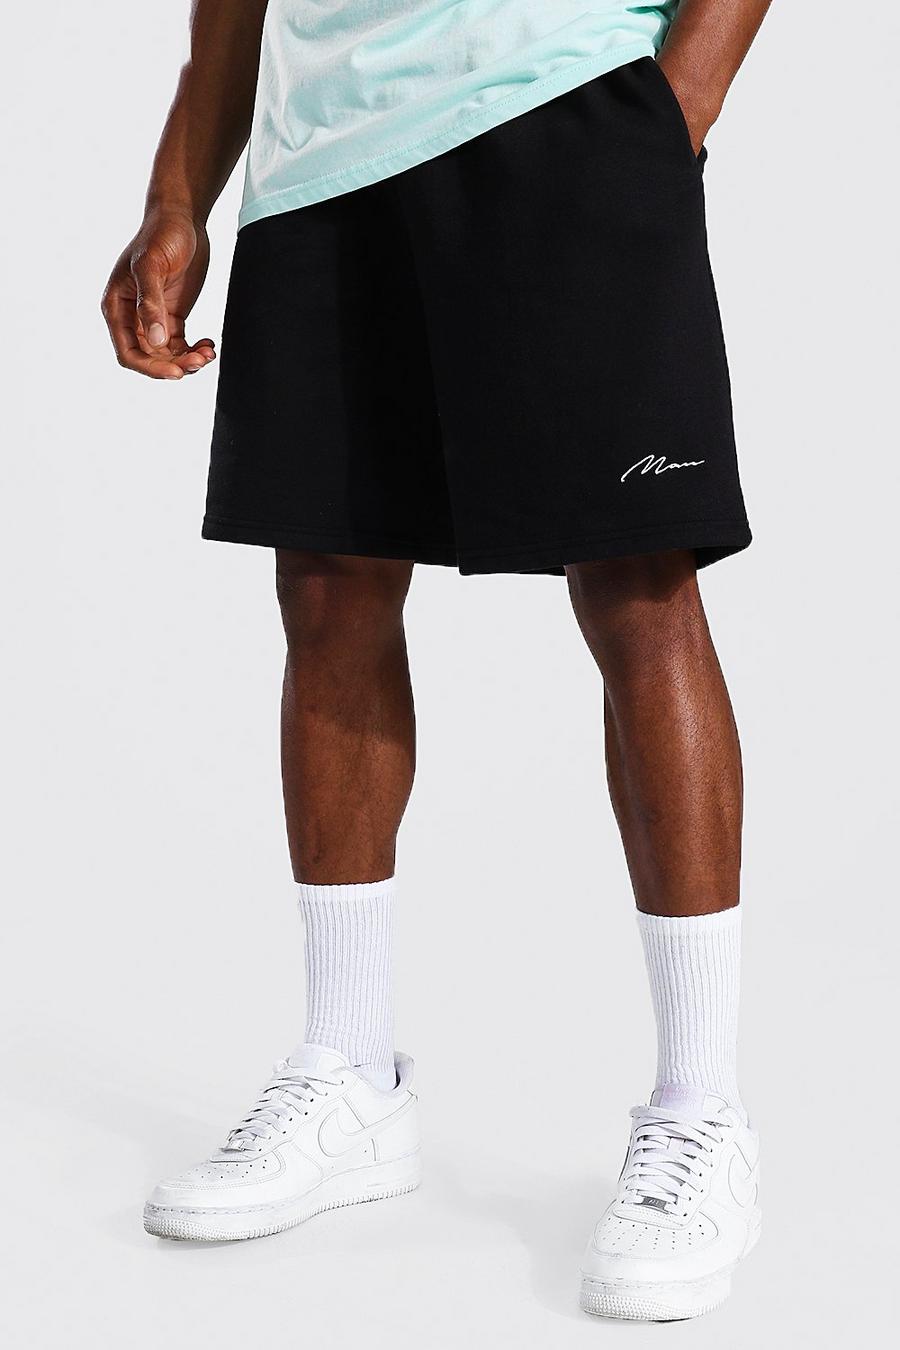 Pantalones cortos MAN Signature holgados de tela jersey , Black image number 1